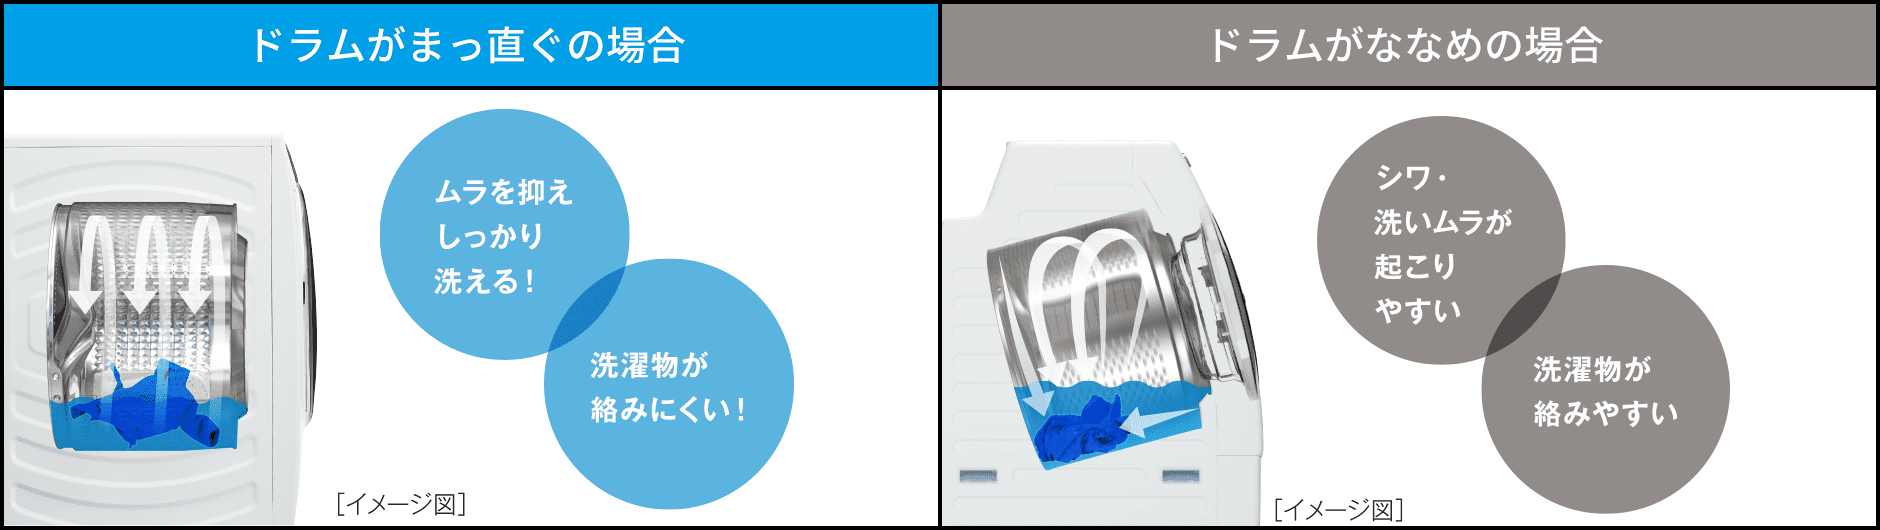 AQUAドラム式洗濯乾燥機AQW-SD12P-LとAQW-D12P-L 違い口コミ レビュー!【鬼比較】